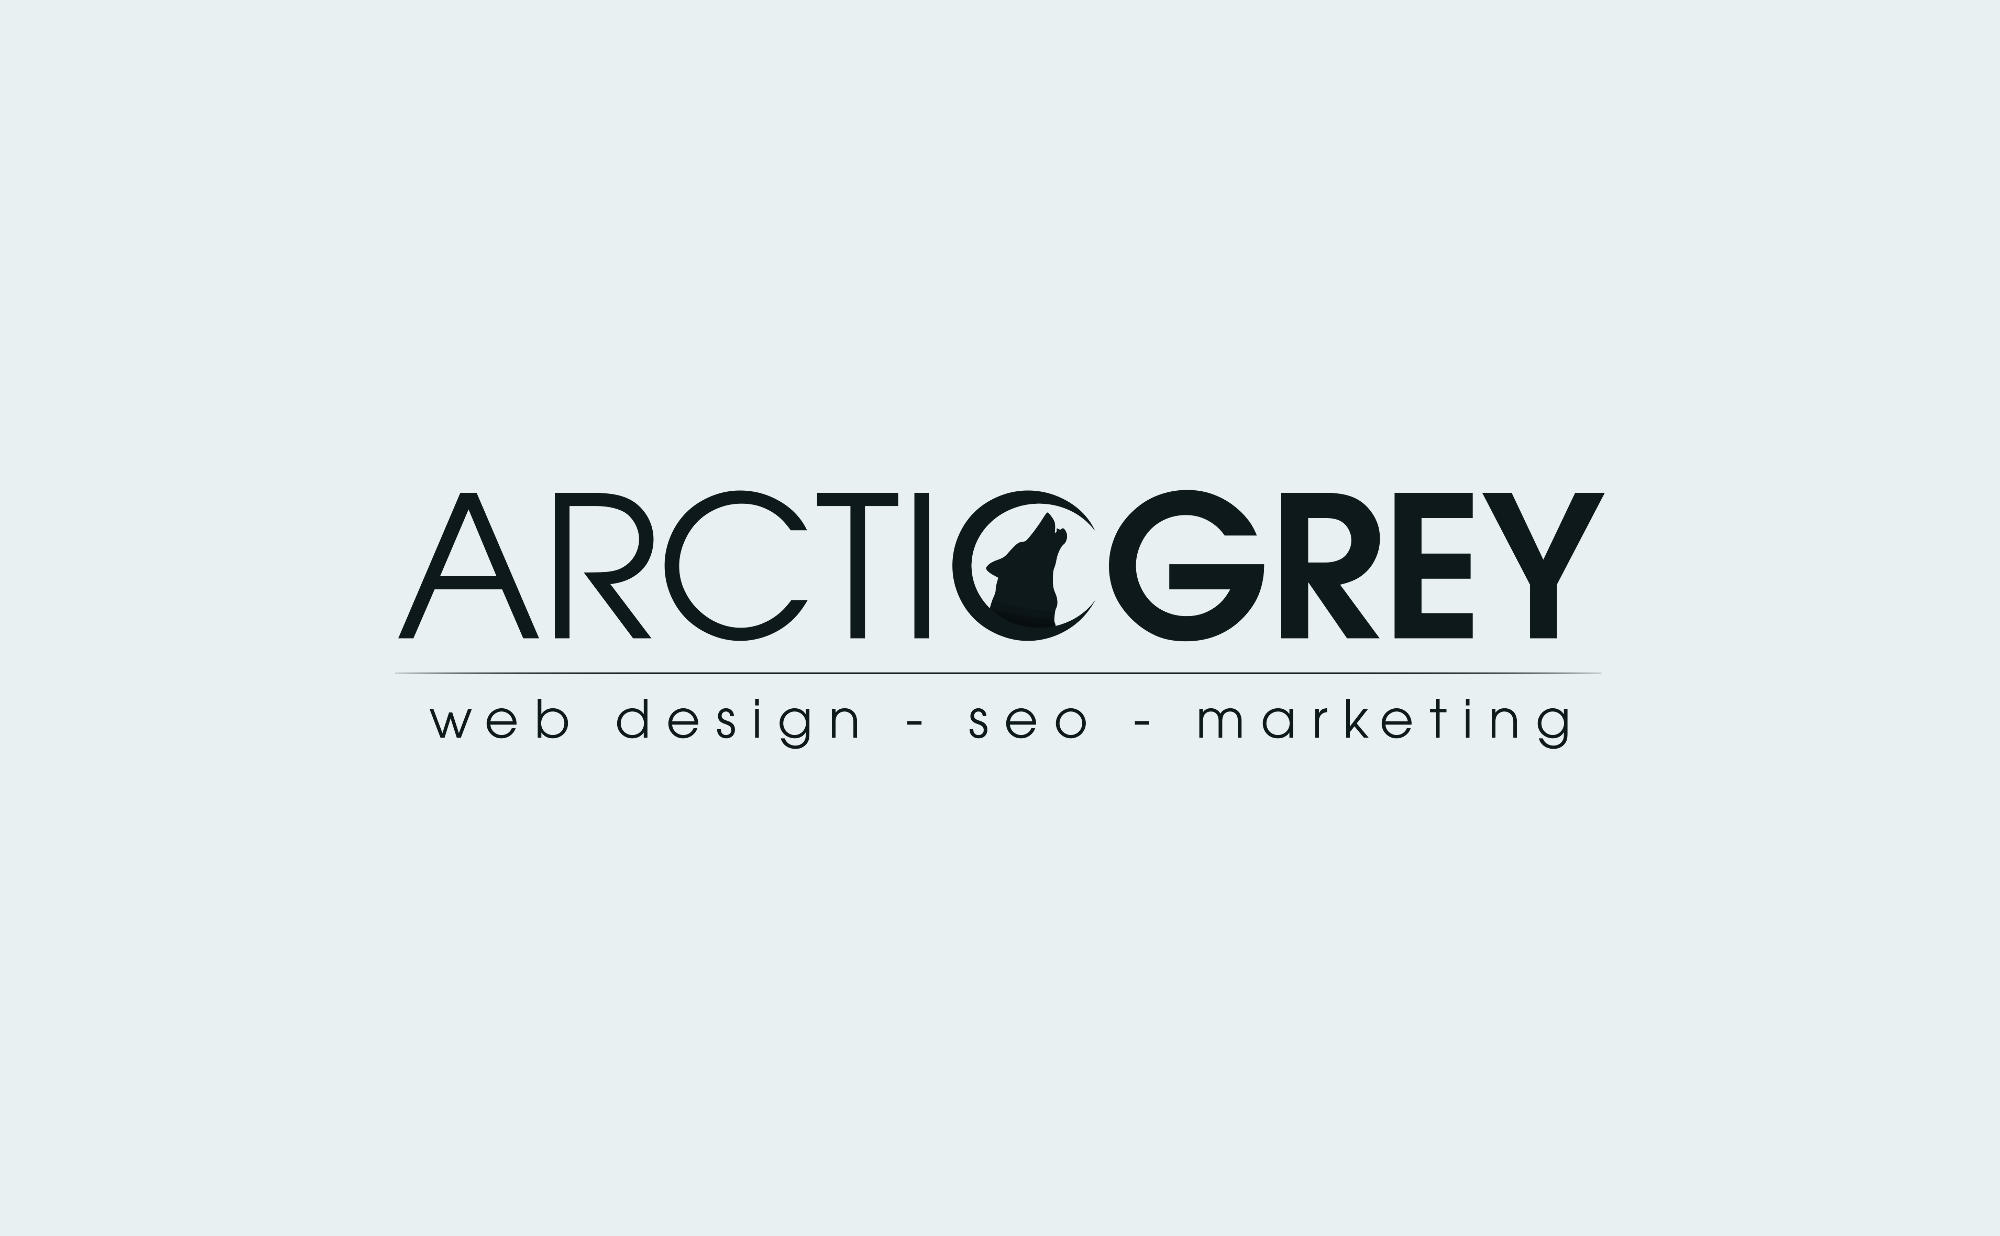 Best SEO Website Design Firm Logo: Arctic Grey Inc